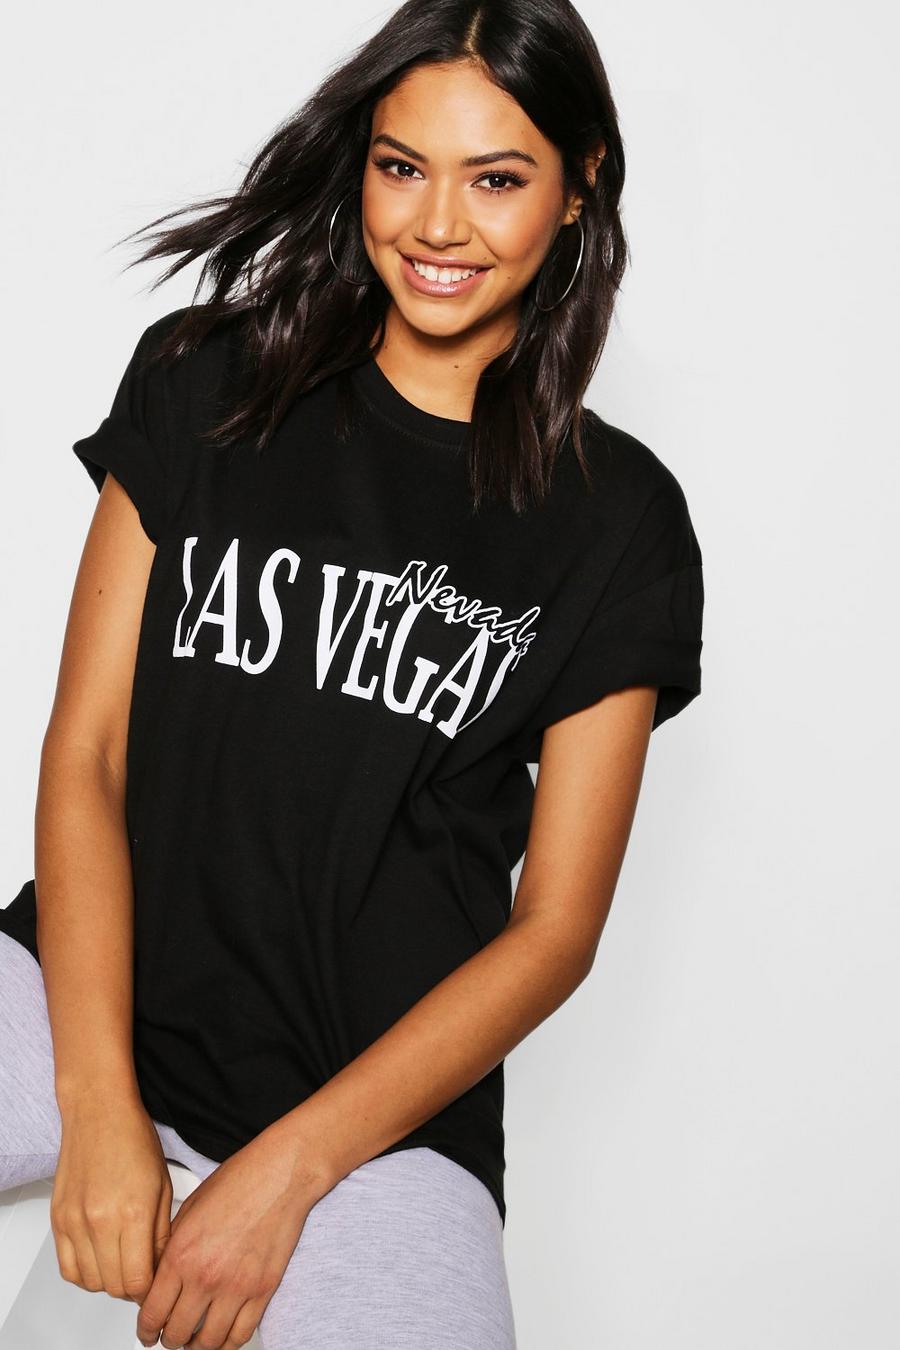 I Heart Las Vegas T-shirt - I Love Las Vegas Tee Gift 